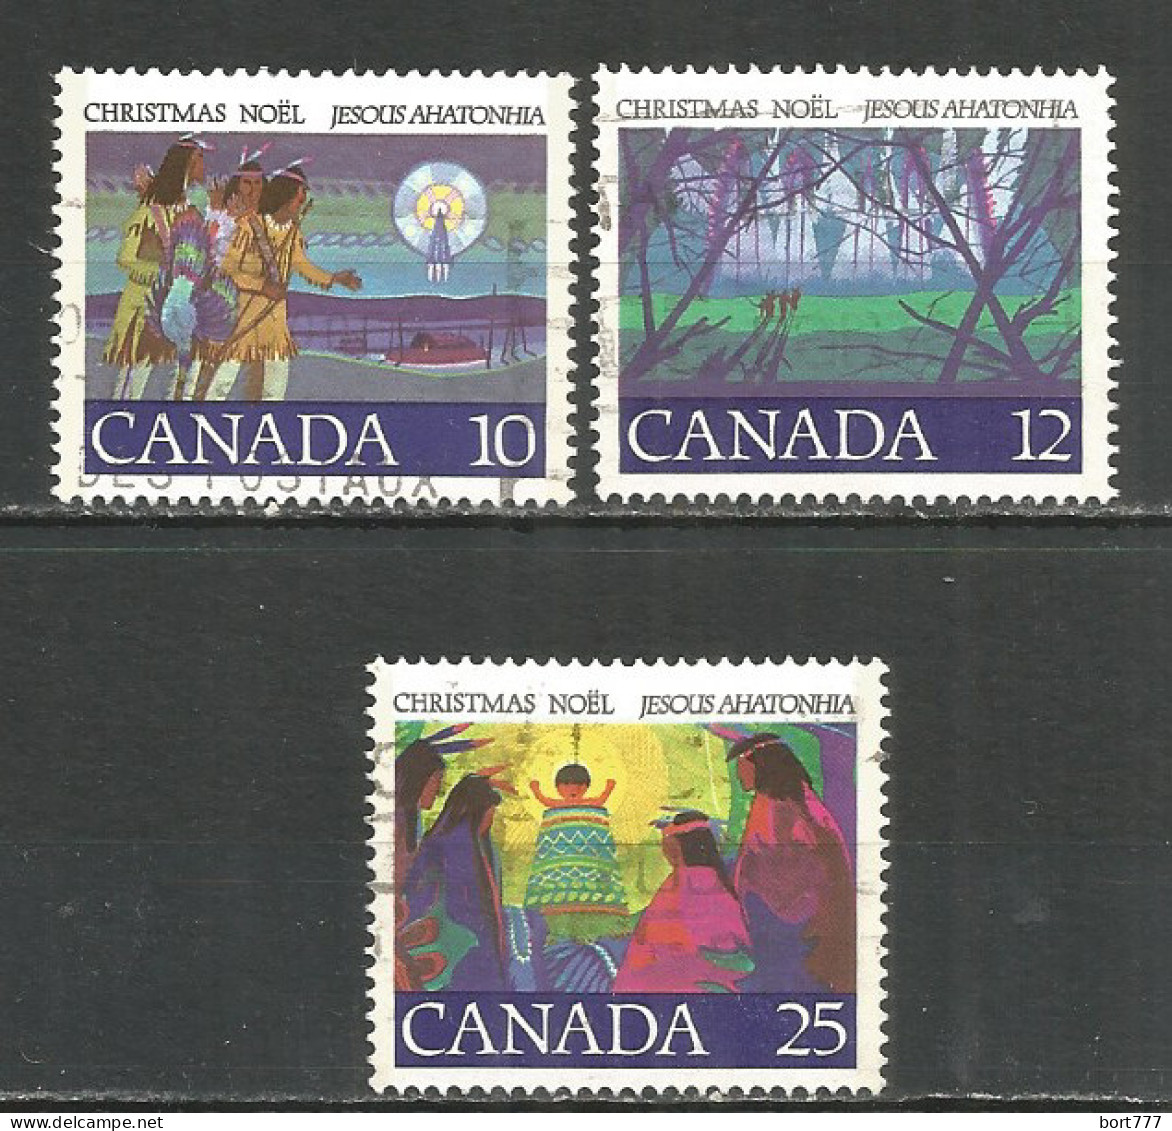 Canada 1977 Year, Used Stamps Mi.# 669-71 - Gebruikt